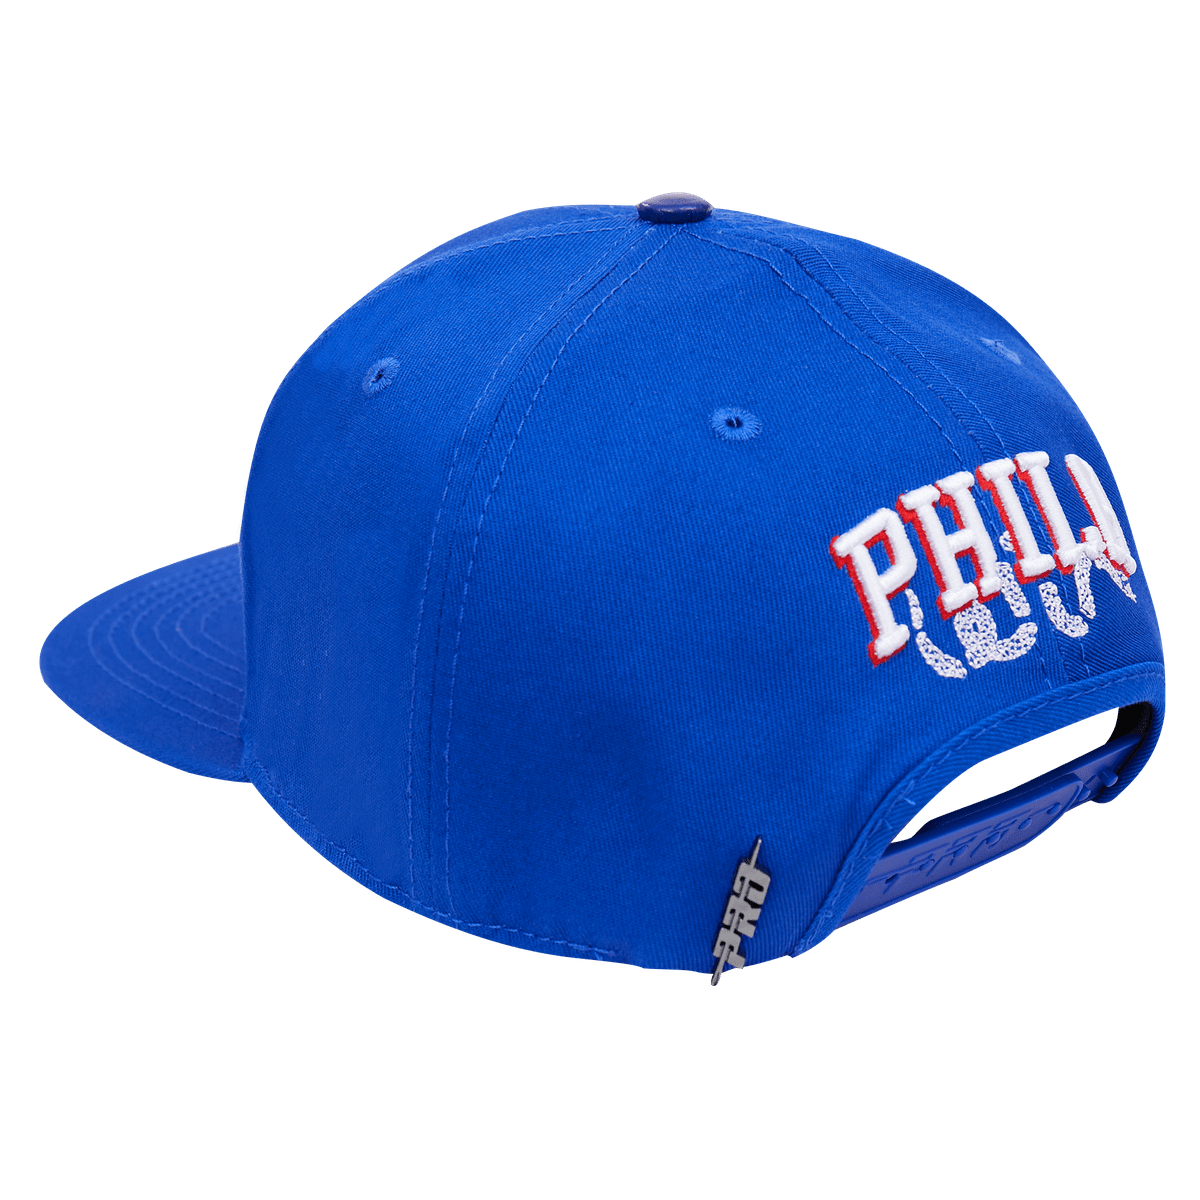 PHILADELPHIA 76ERS CLASSIC LOGO SNAPBACK HAT (UNIVERSITY BLUE